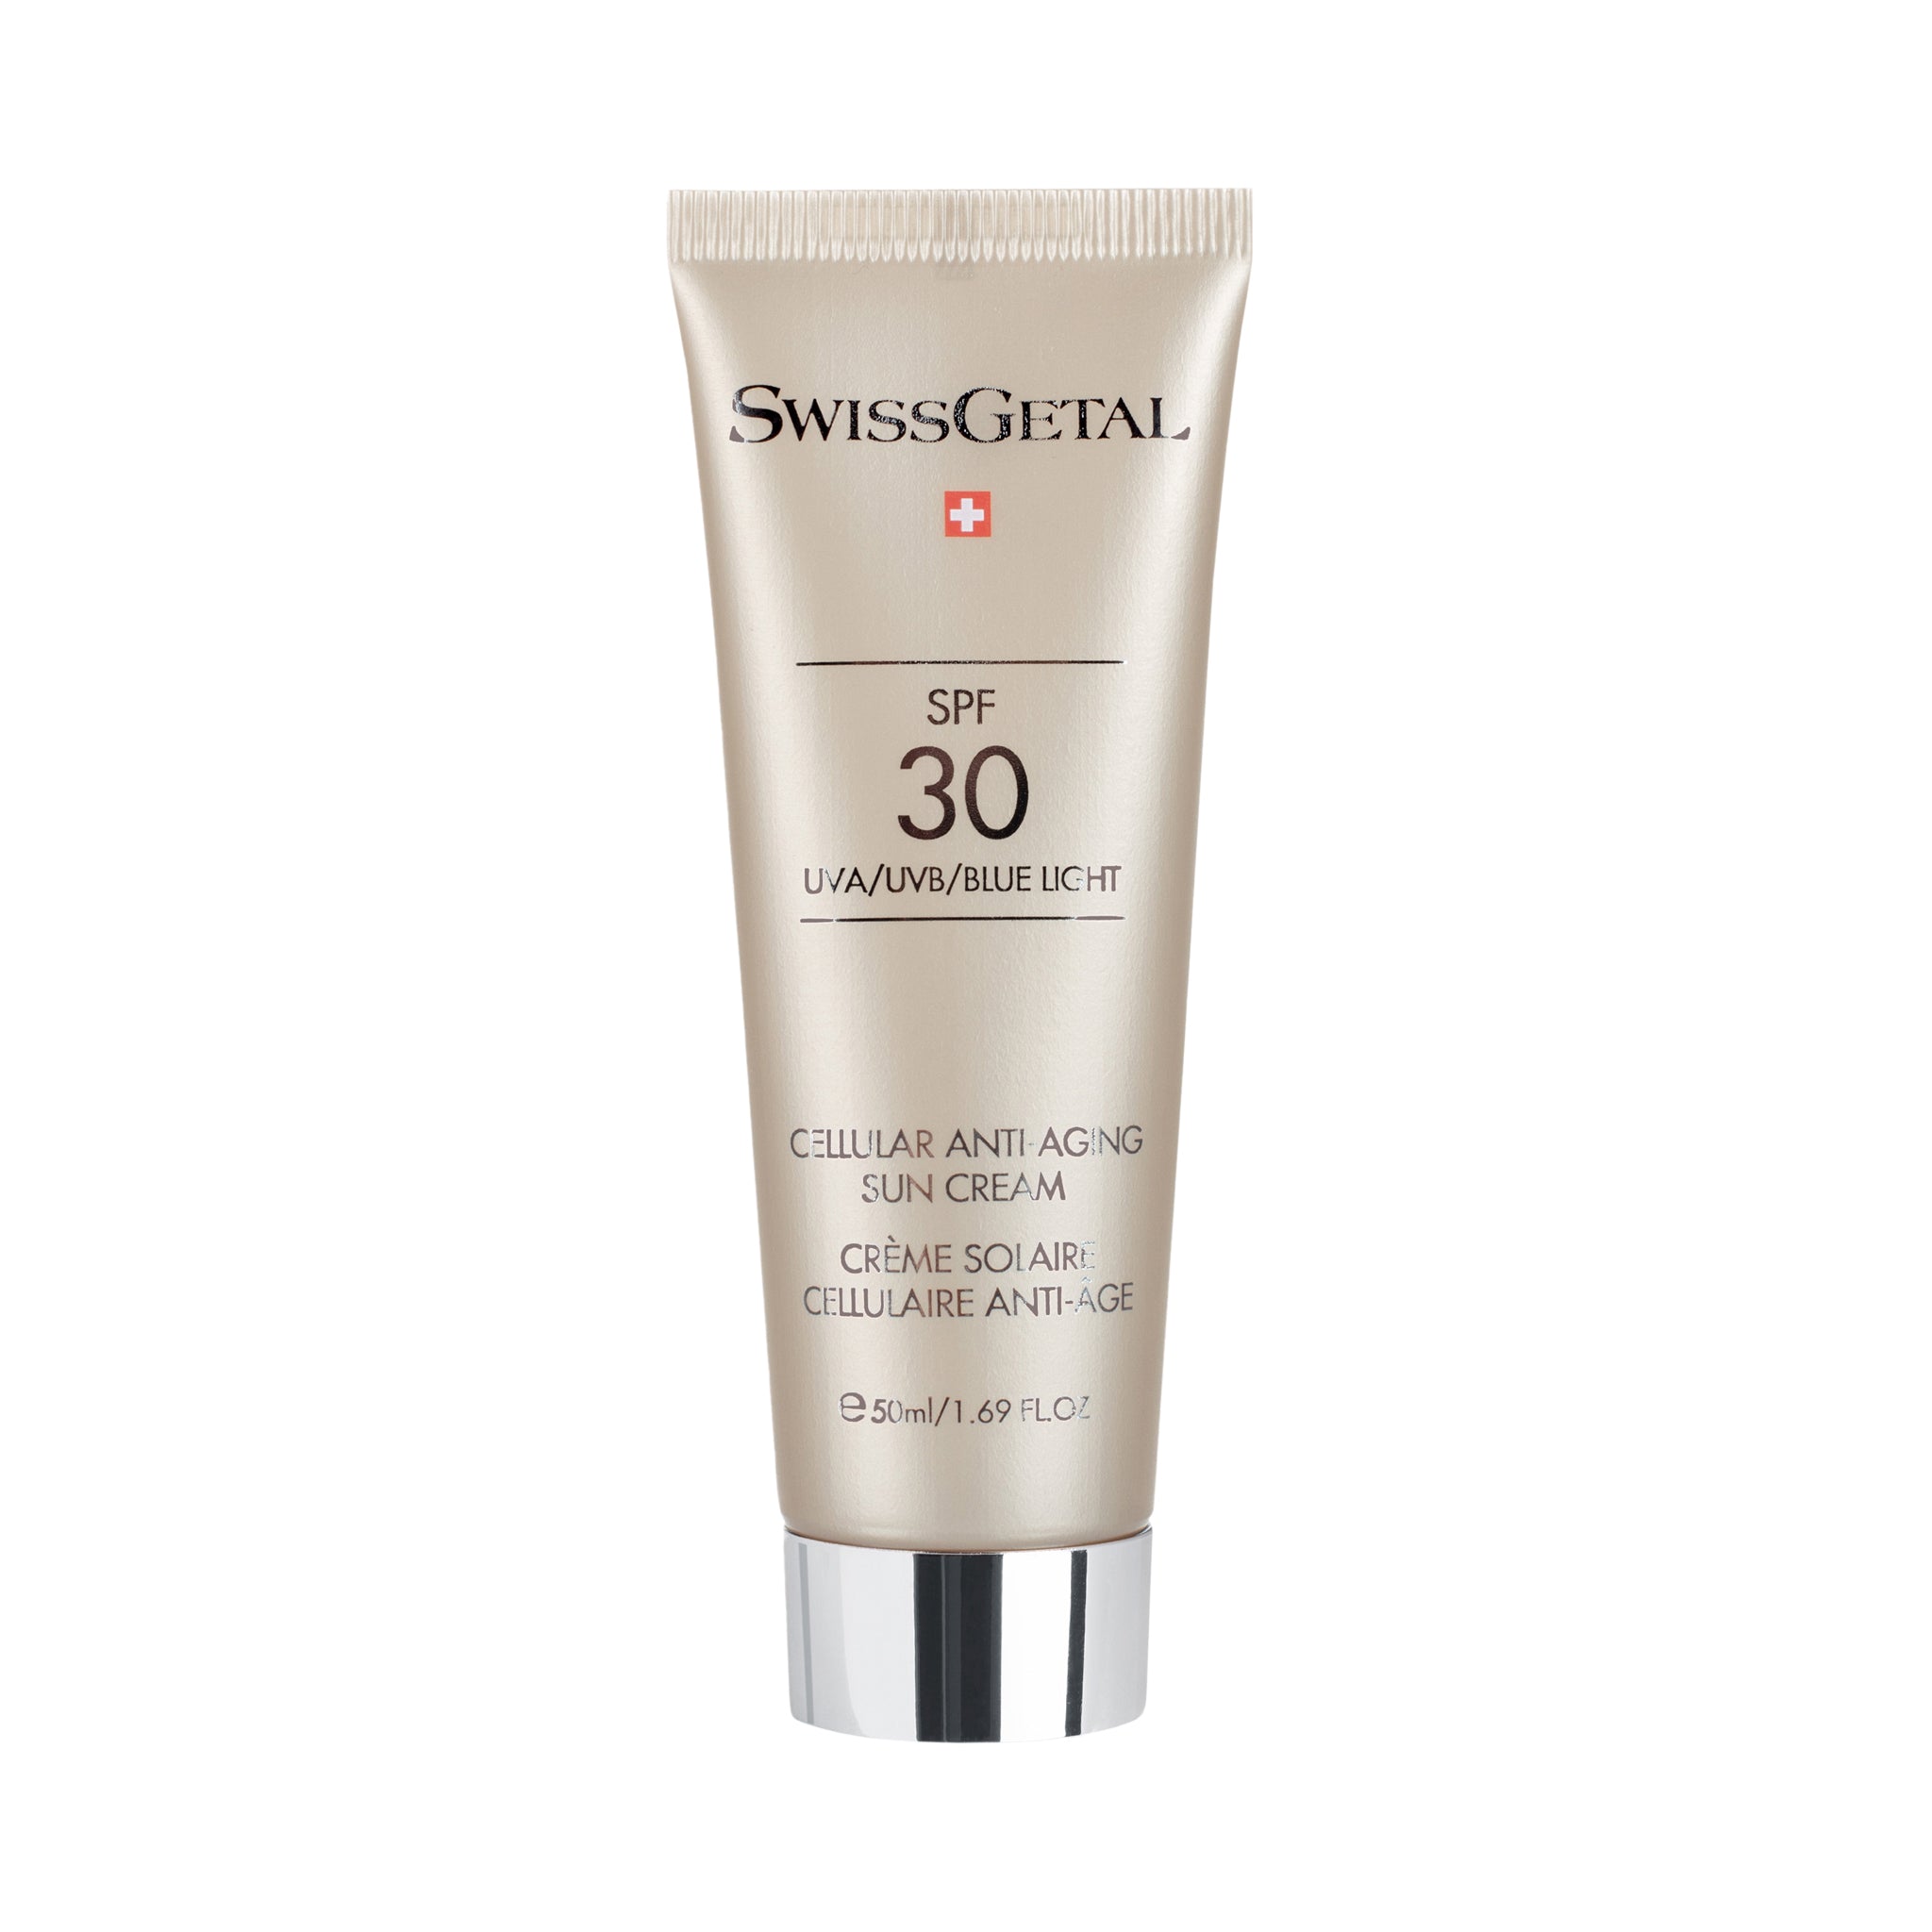 Cellular Anti Aging Sun Cream SPF 30